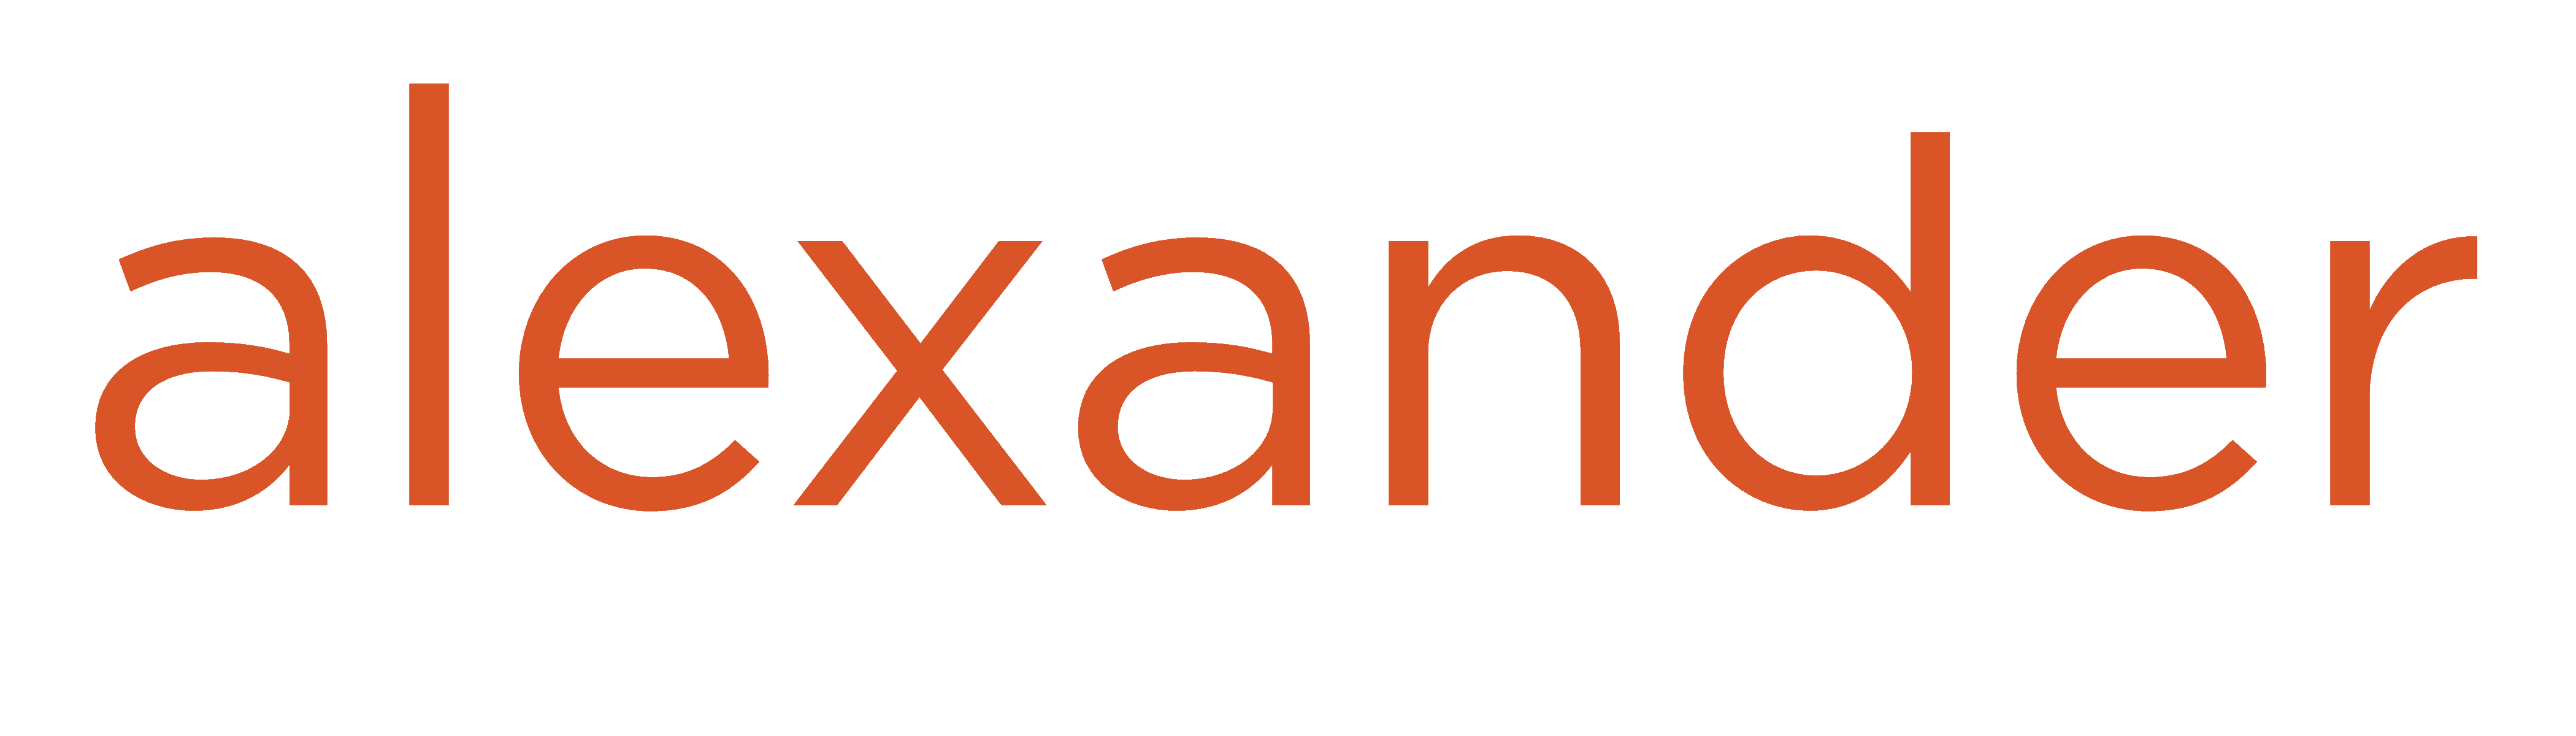 The Alexander String Quartet (logo typed text)